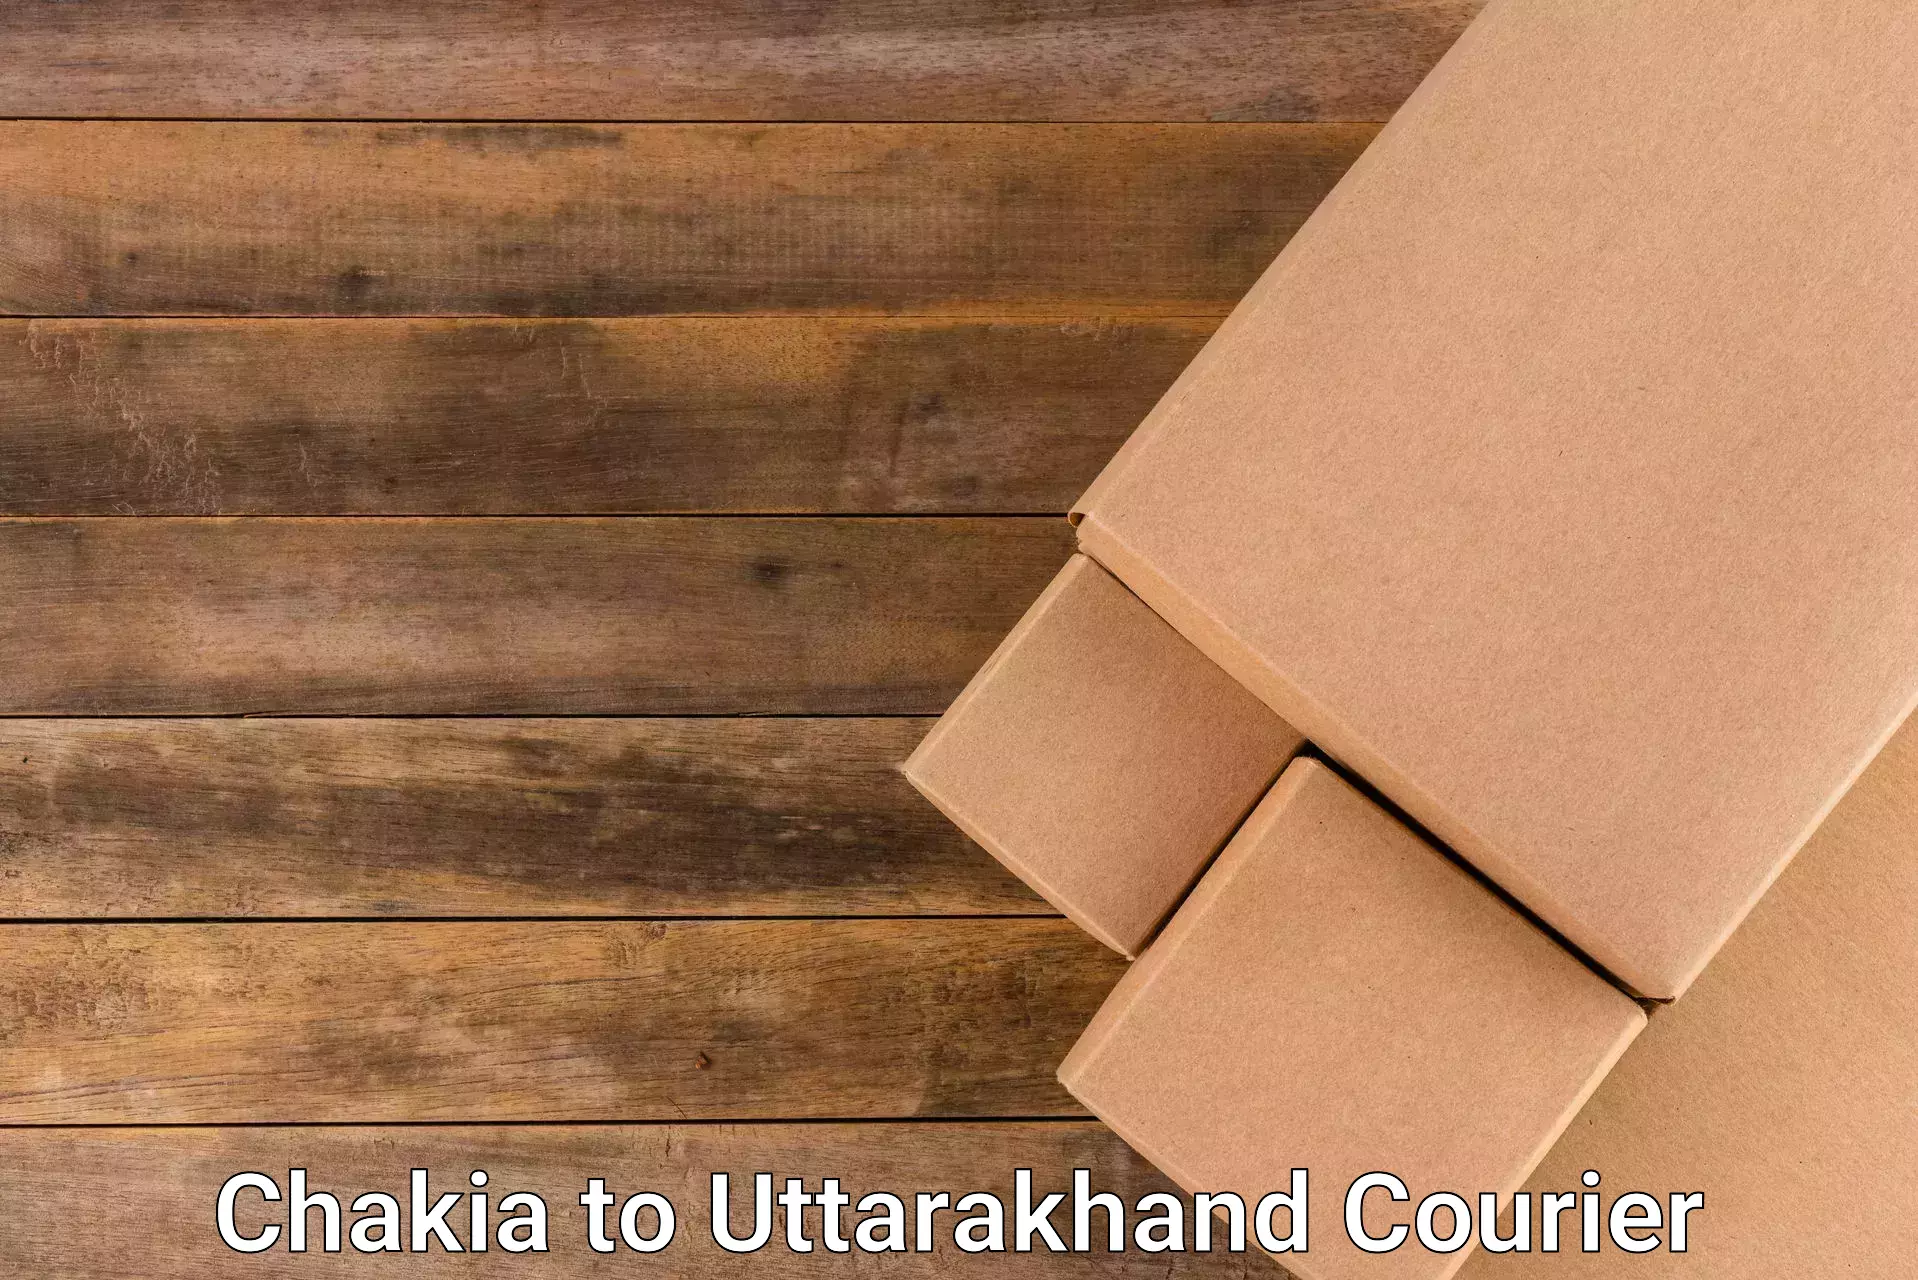 Modern delivery methods Chakia to Uttarakhand